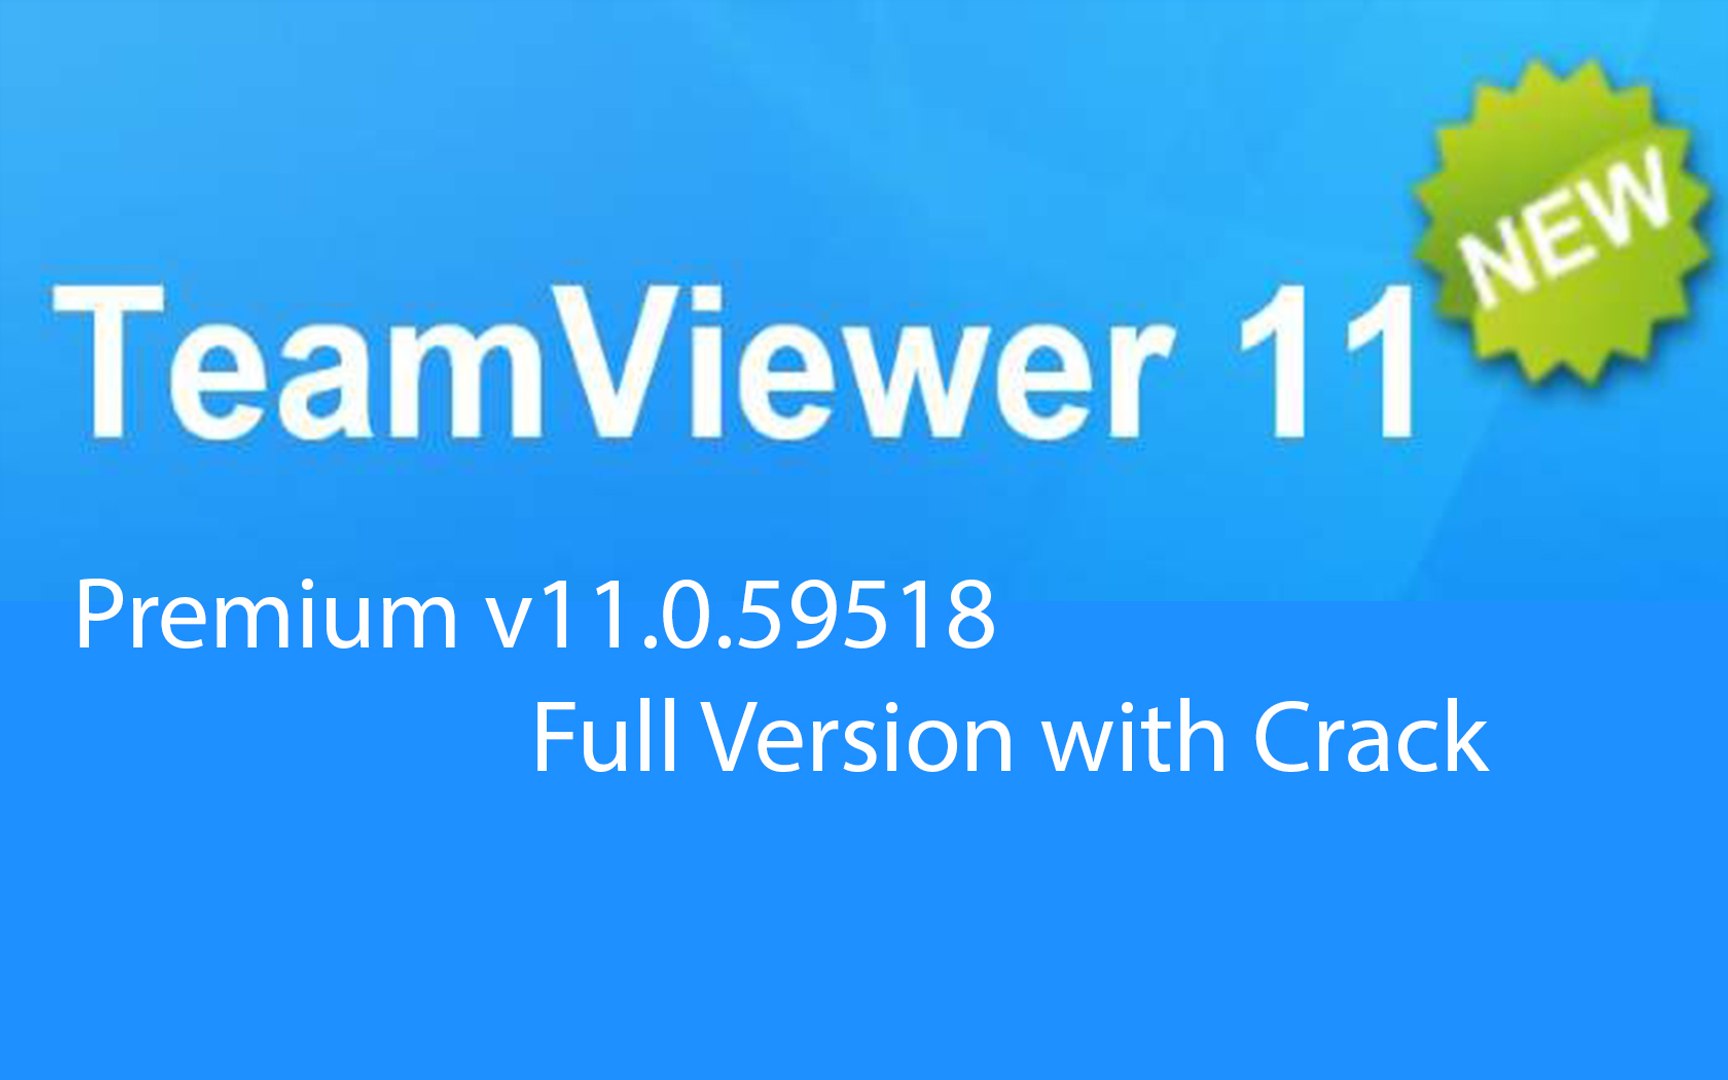 TeamViewer on X: TeamViewer 11 released! Test it today:   #TeamViewer11  / X